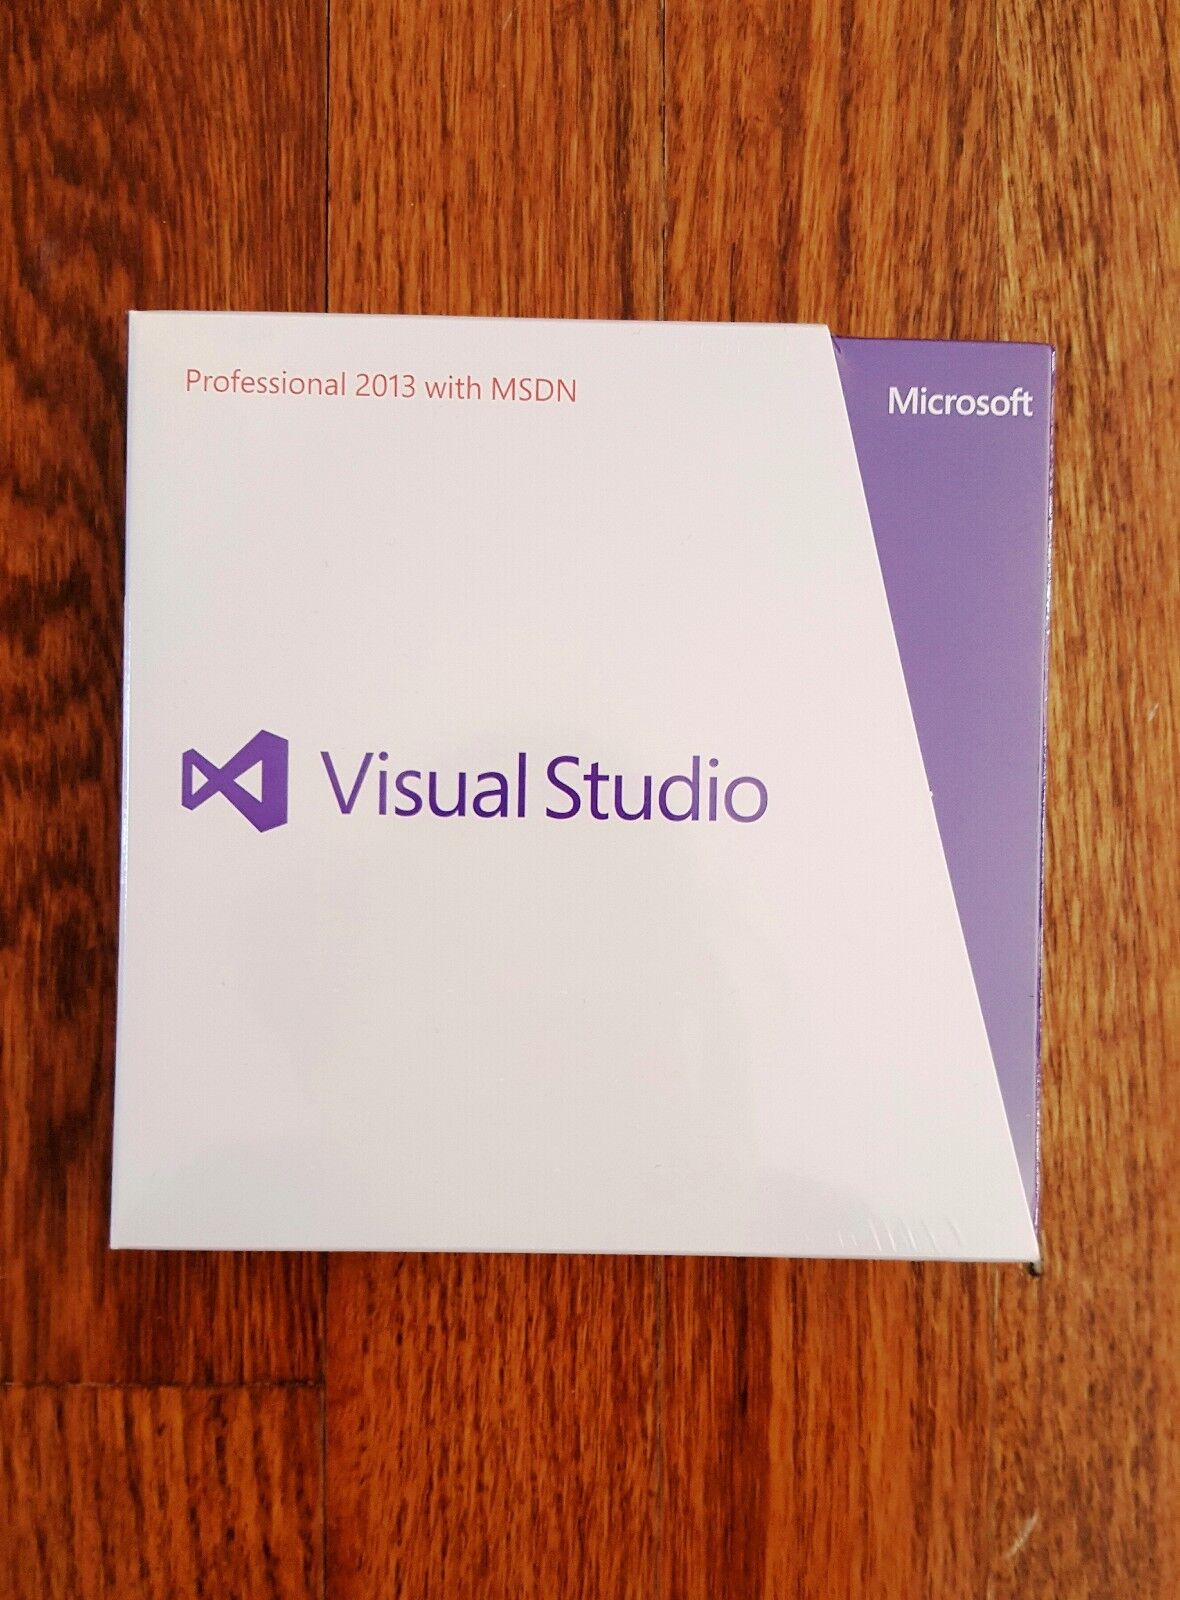 Visual Studio Professional 2013 with MSDN, SKU 79D-00326, Sealed Retail Box